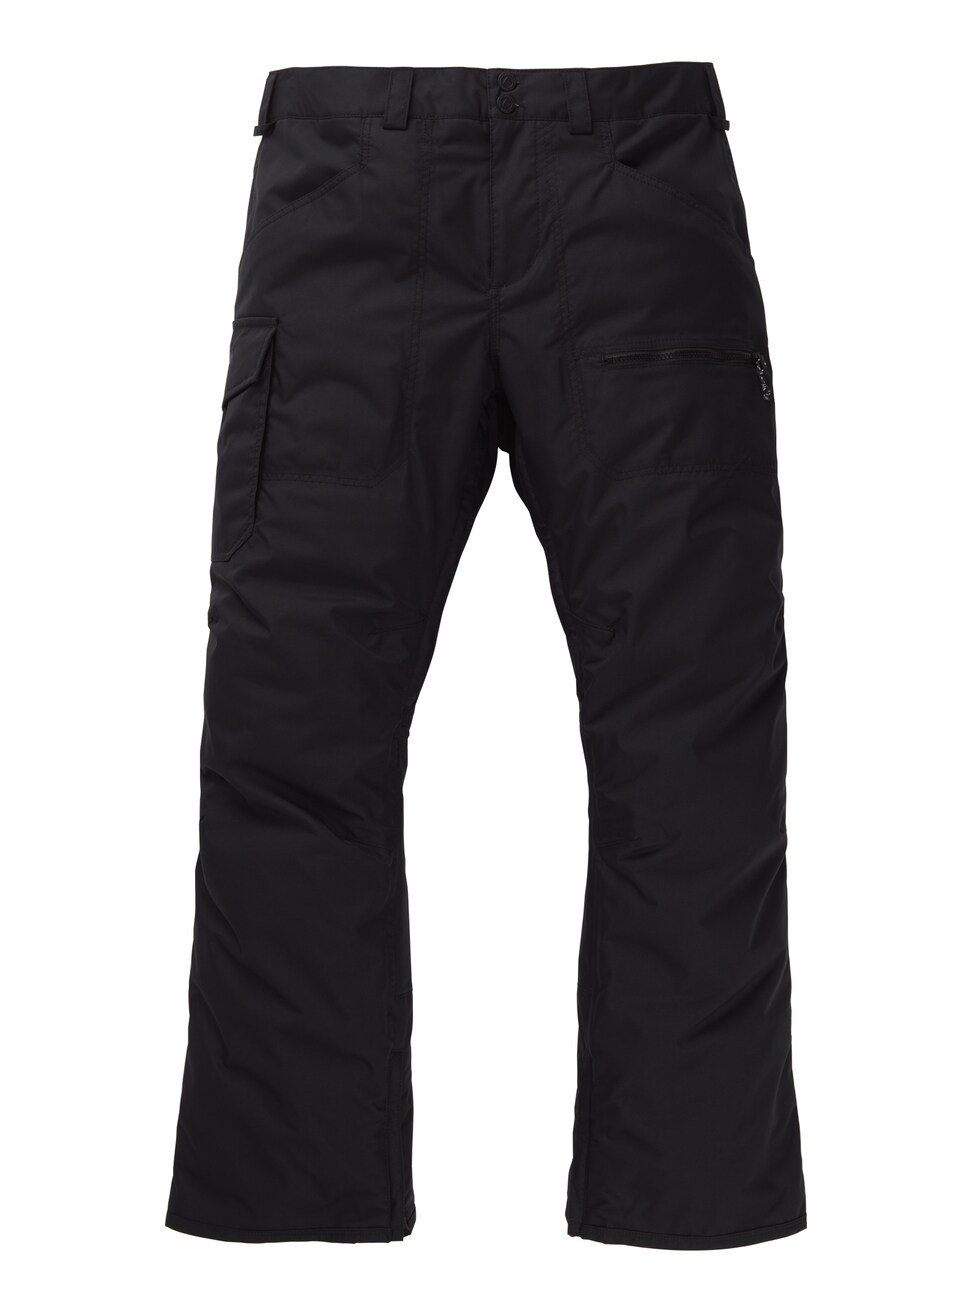 Burton Covert men's snowboard pants true black